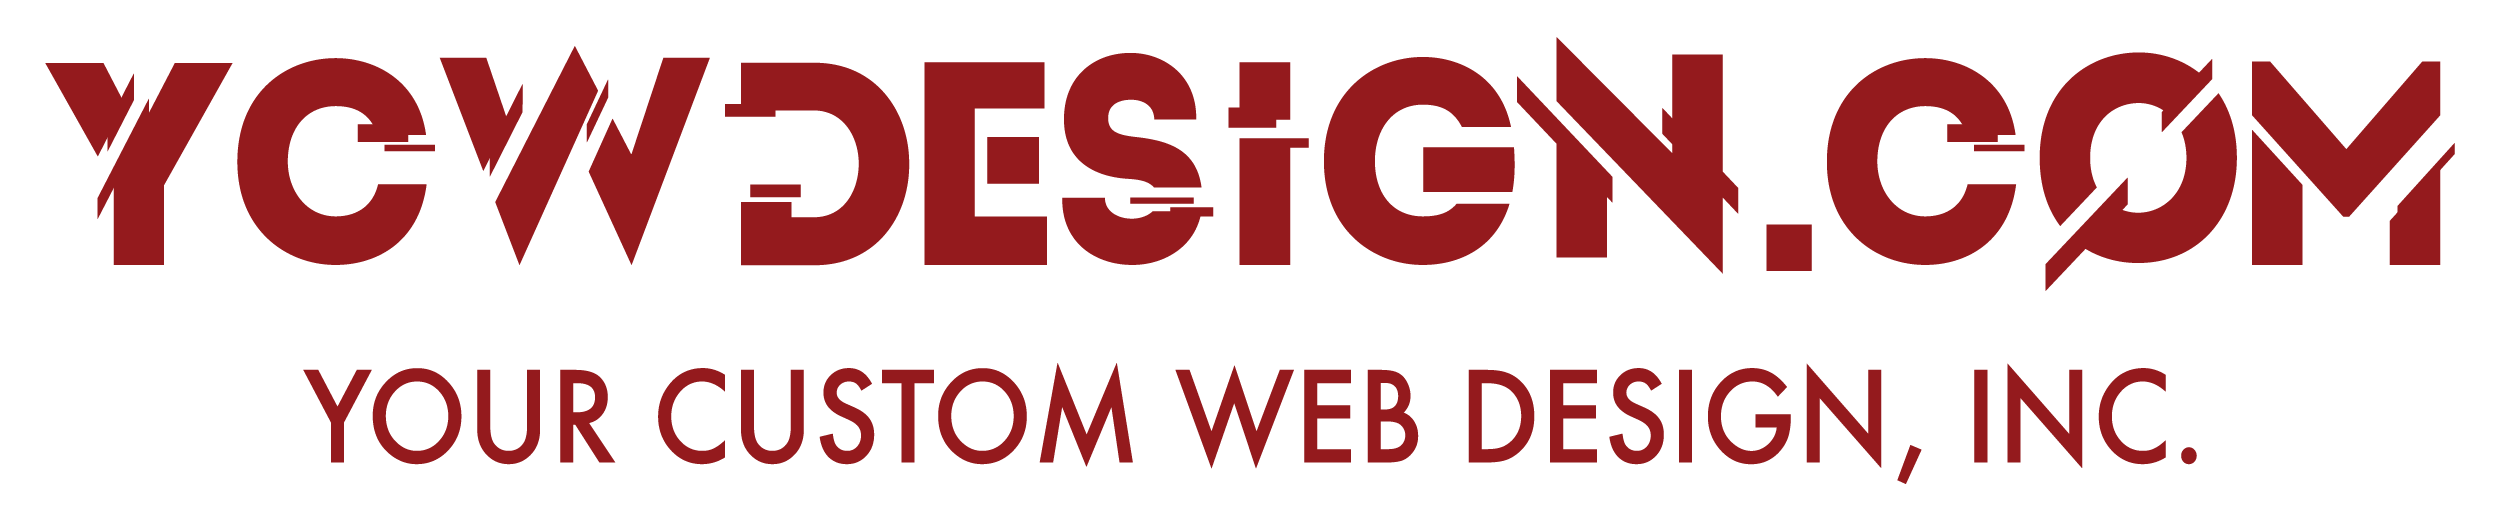 Your Custom Web Design, Inc. dark red banner logo